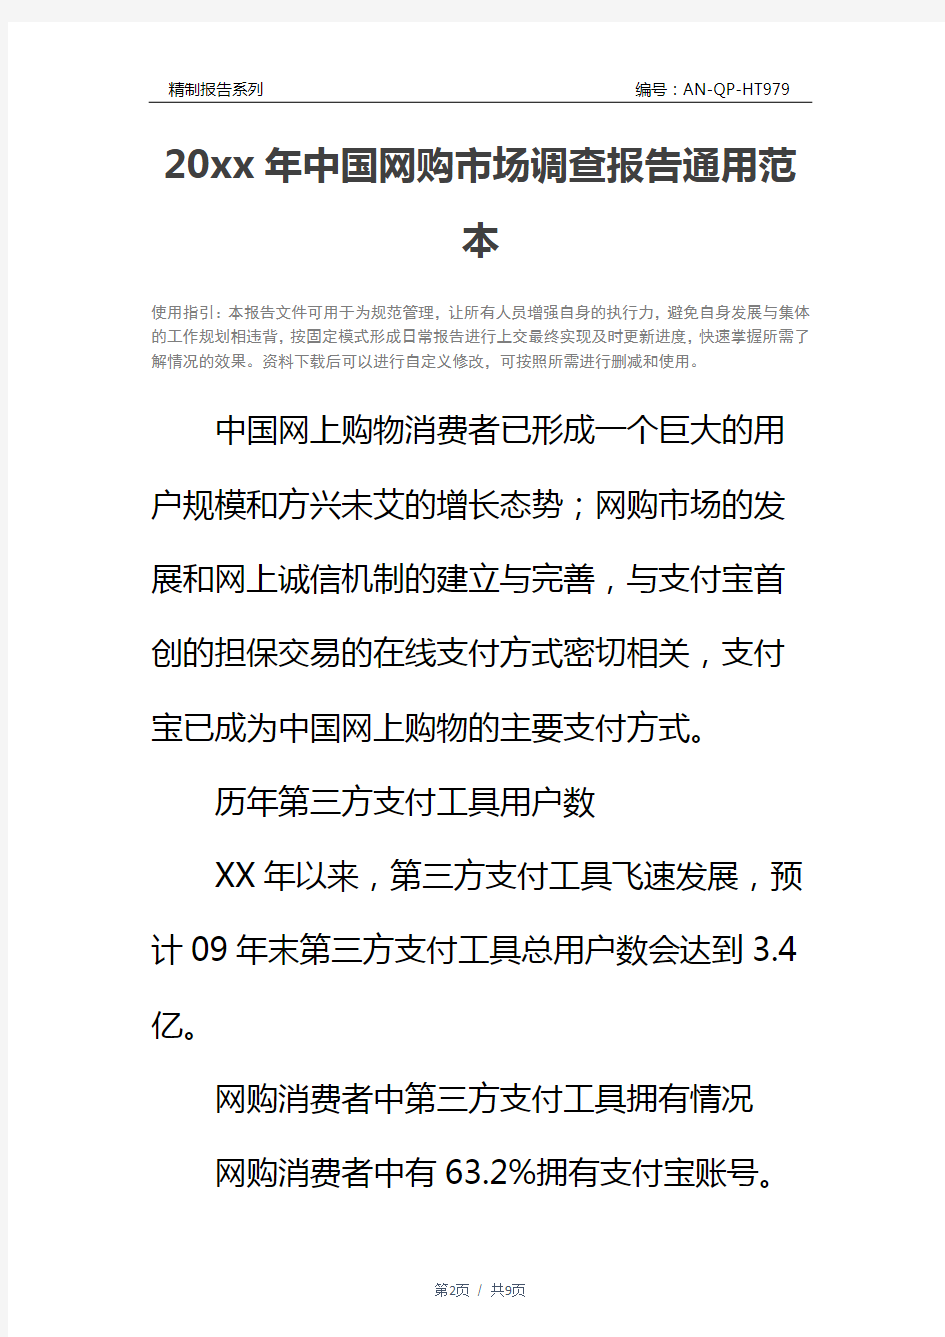 20xx年中国网购市场调查报告通用范本